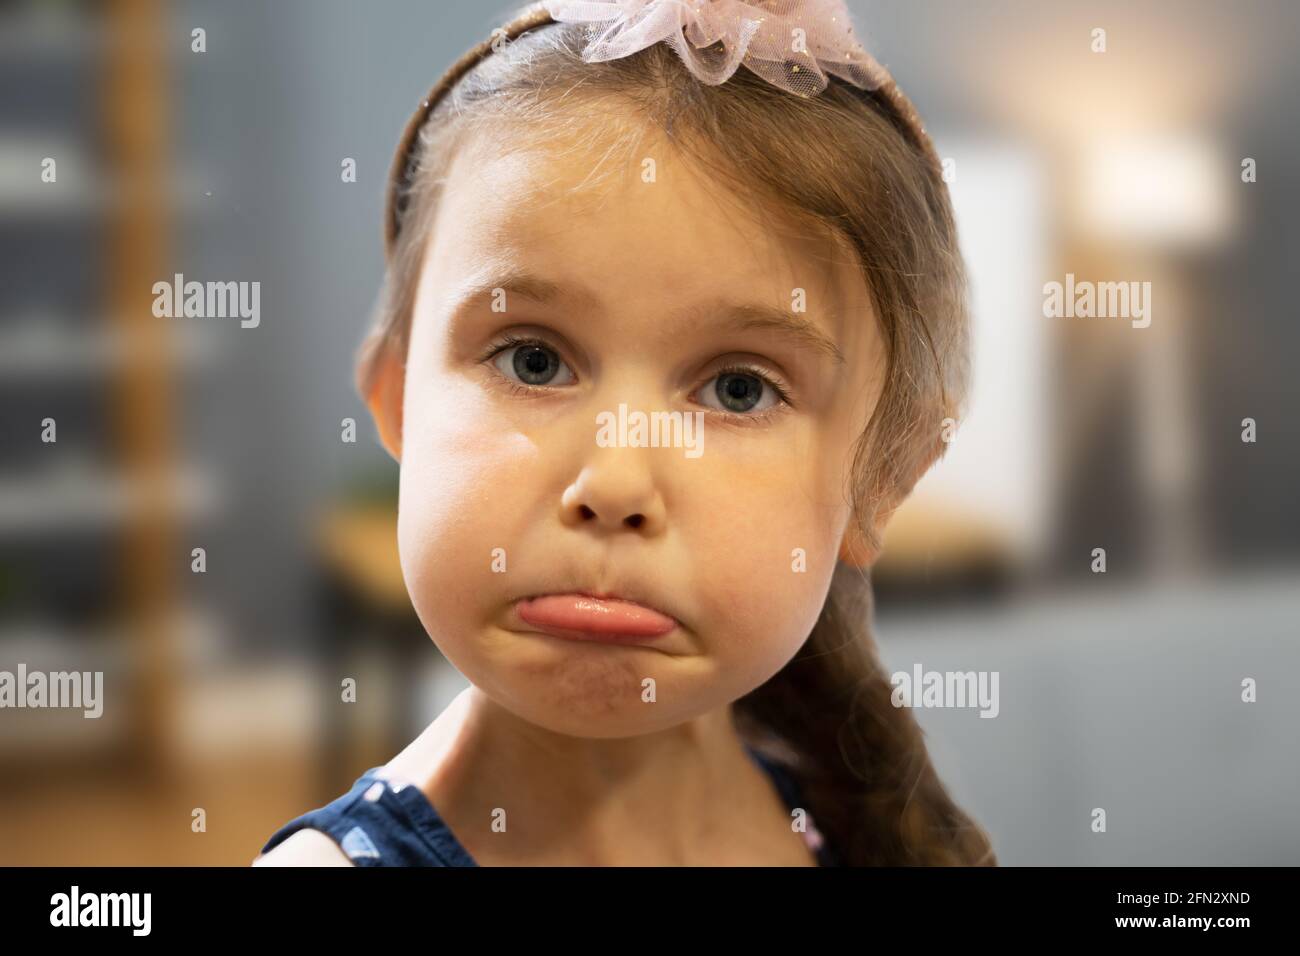 Sad Unhappy Little Girl Emotion. Kid Face Portrait Stock Photo